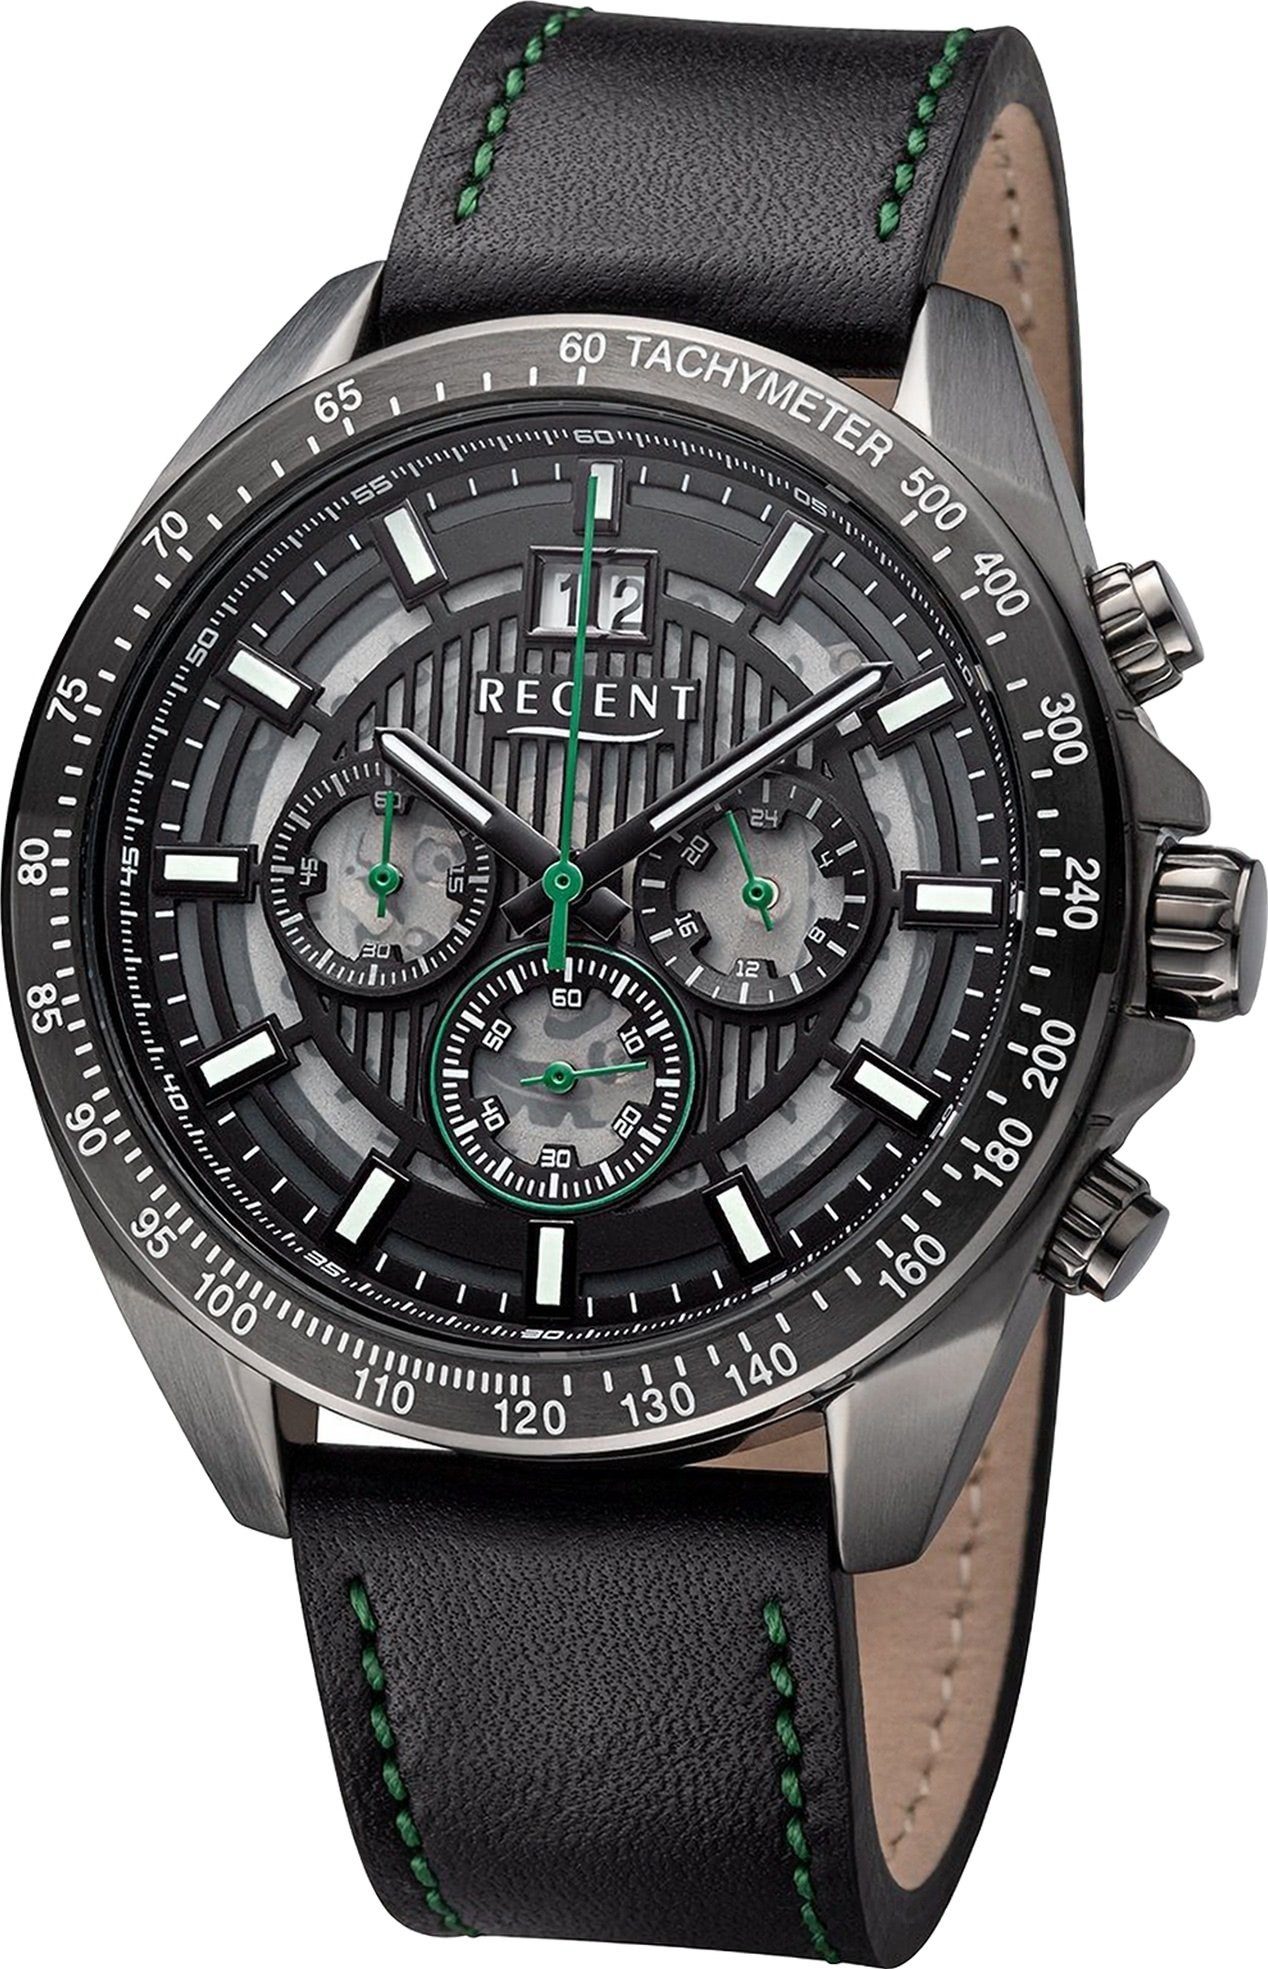 Quarzuhr schwarz, Herren rundes Regent groß Herrenuhr grün, Gehäuse, Regent Lederarmband 46mm) Armbanduhr (ca. Analog,